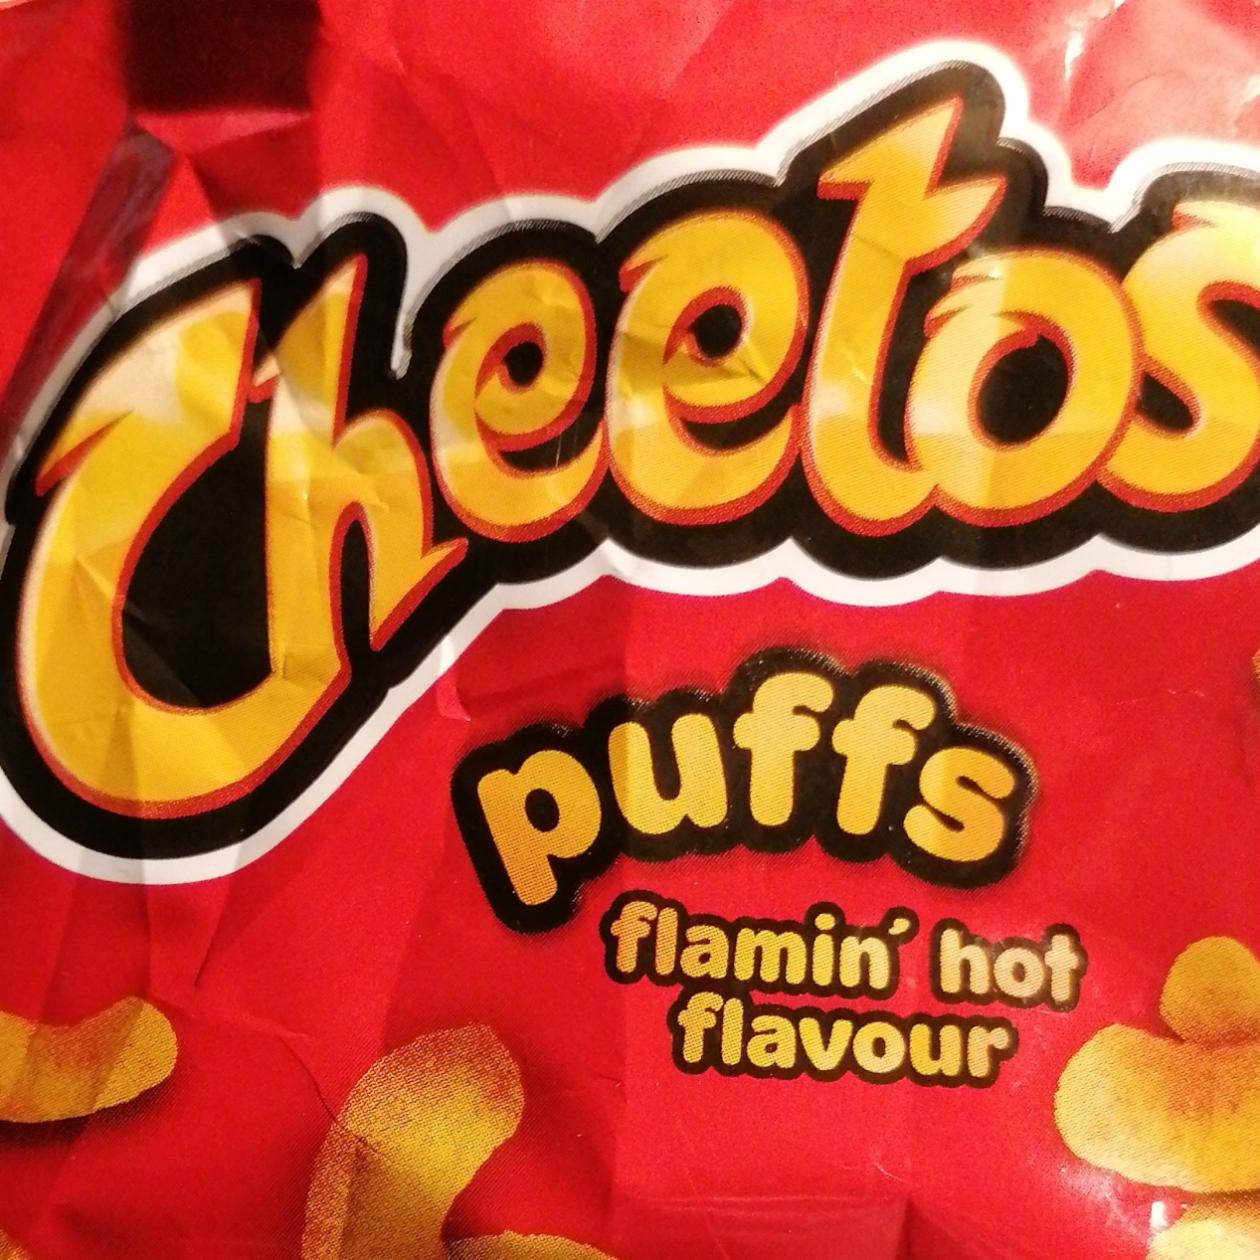 Fotografie - Cheetos puffs flamin' hot flavour